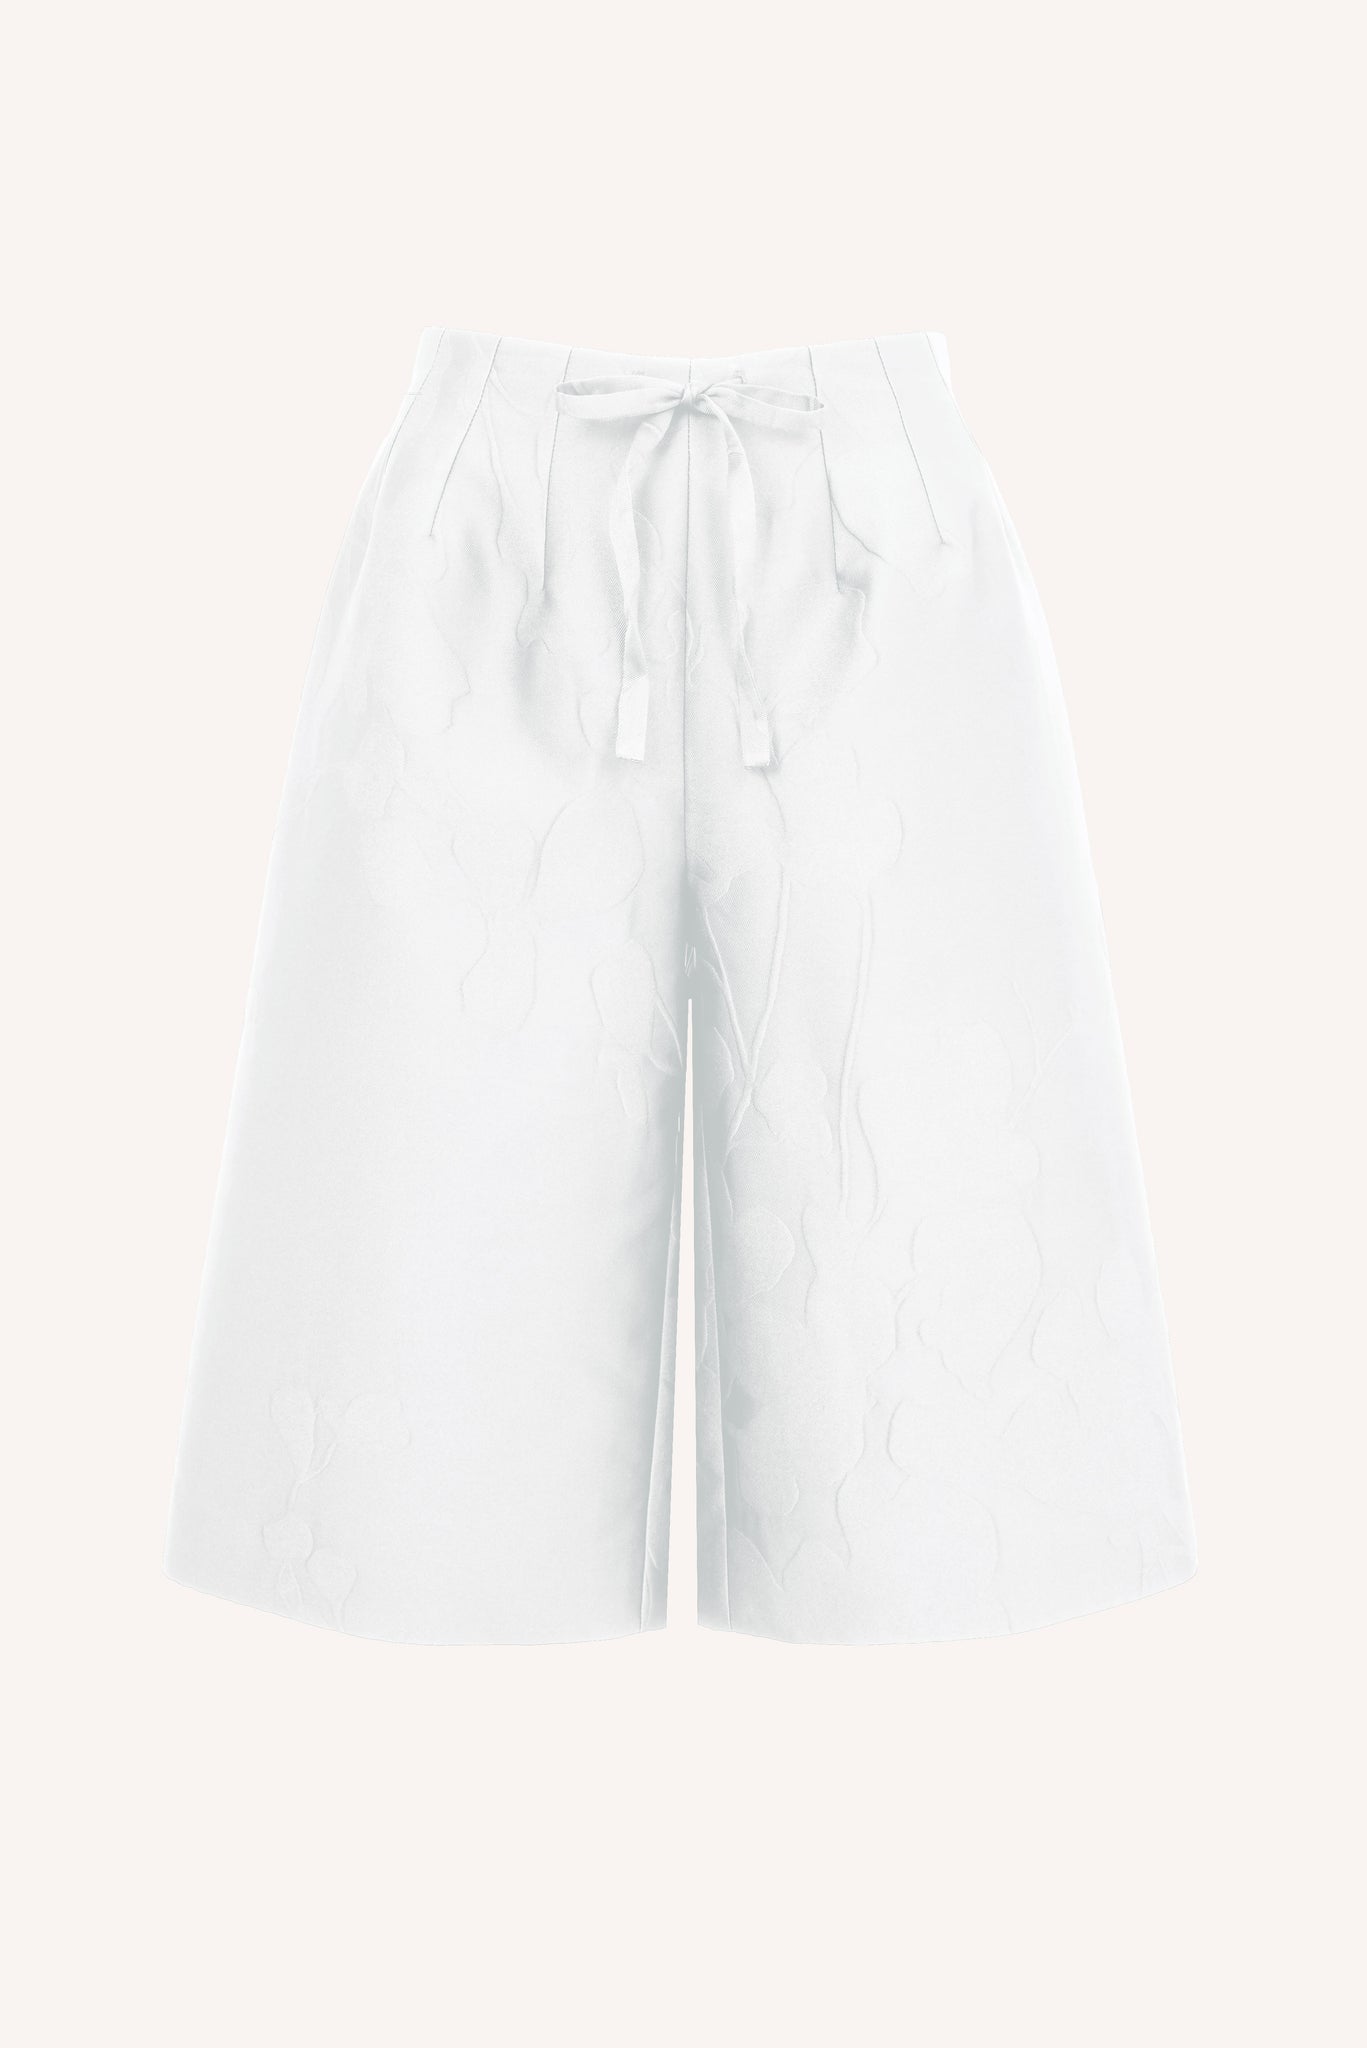 Apera Shorts in White Floral Embossed Cloque | Emilia Wickstead